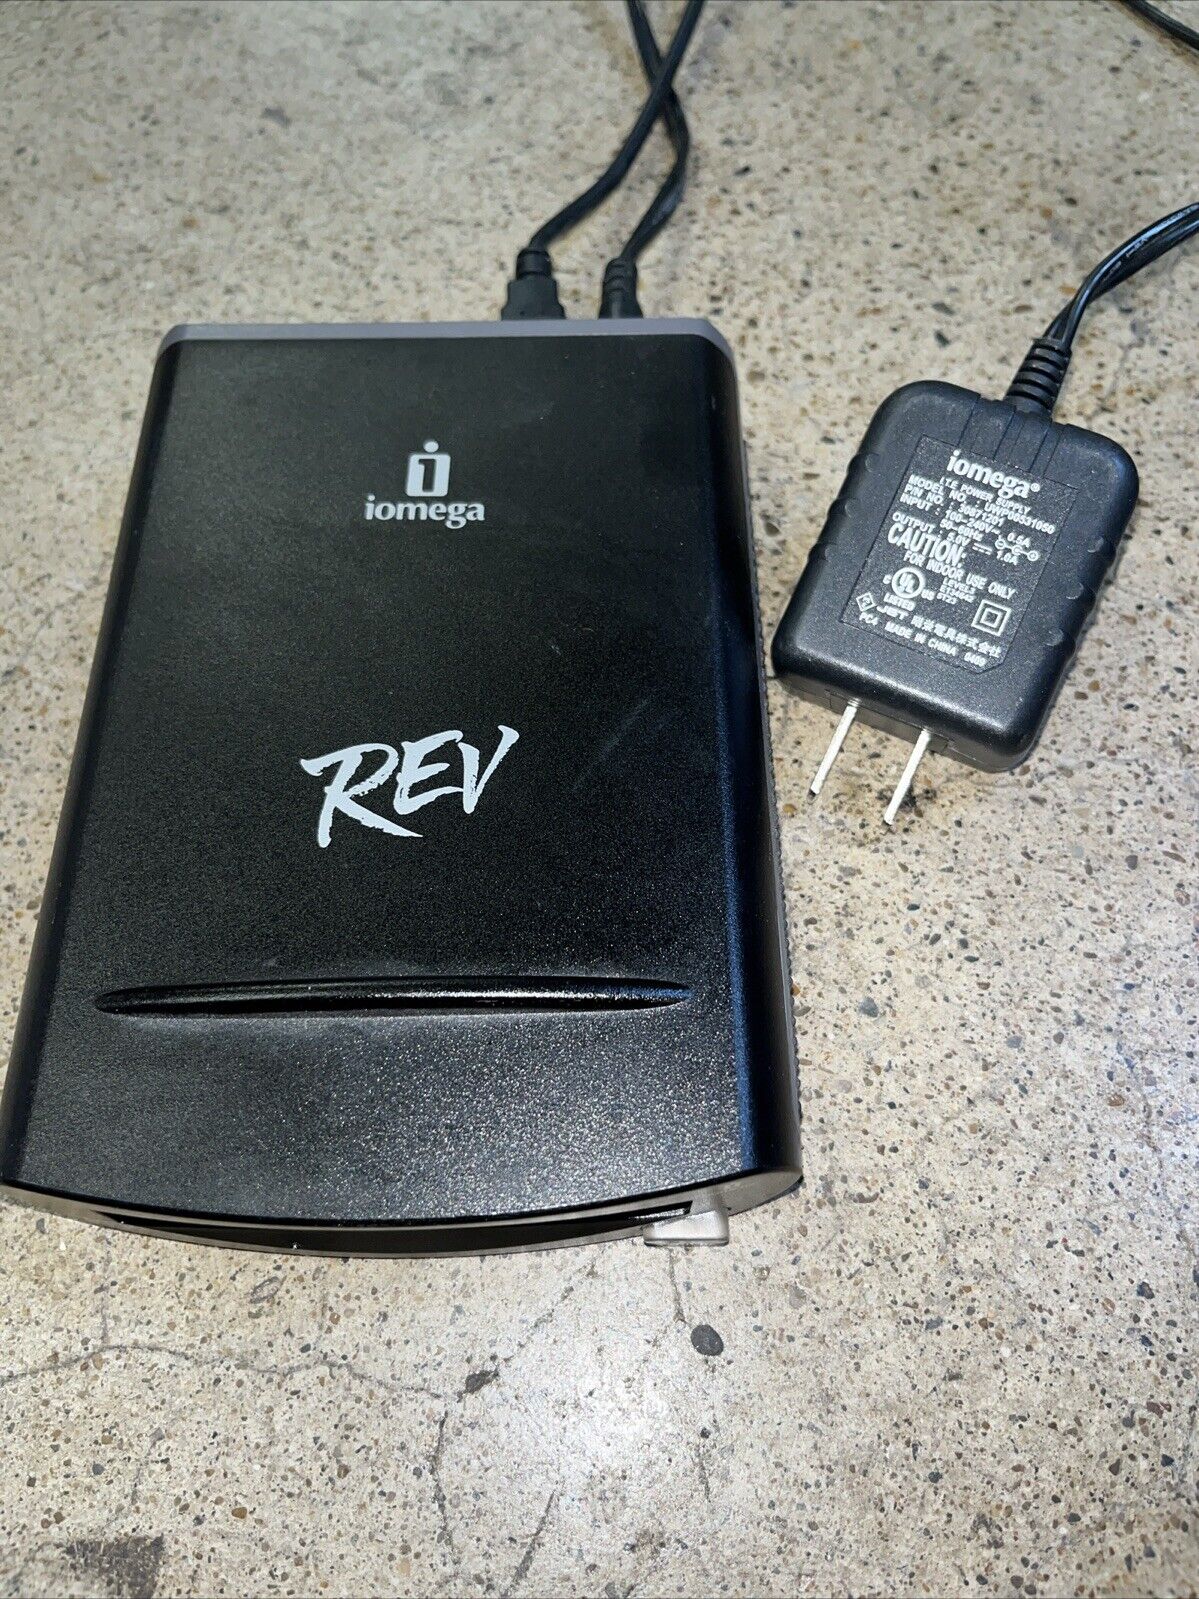 Iomega REV USB Removable External Hard Disk Drive